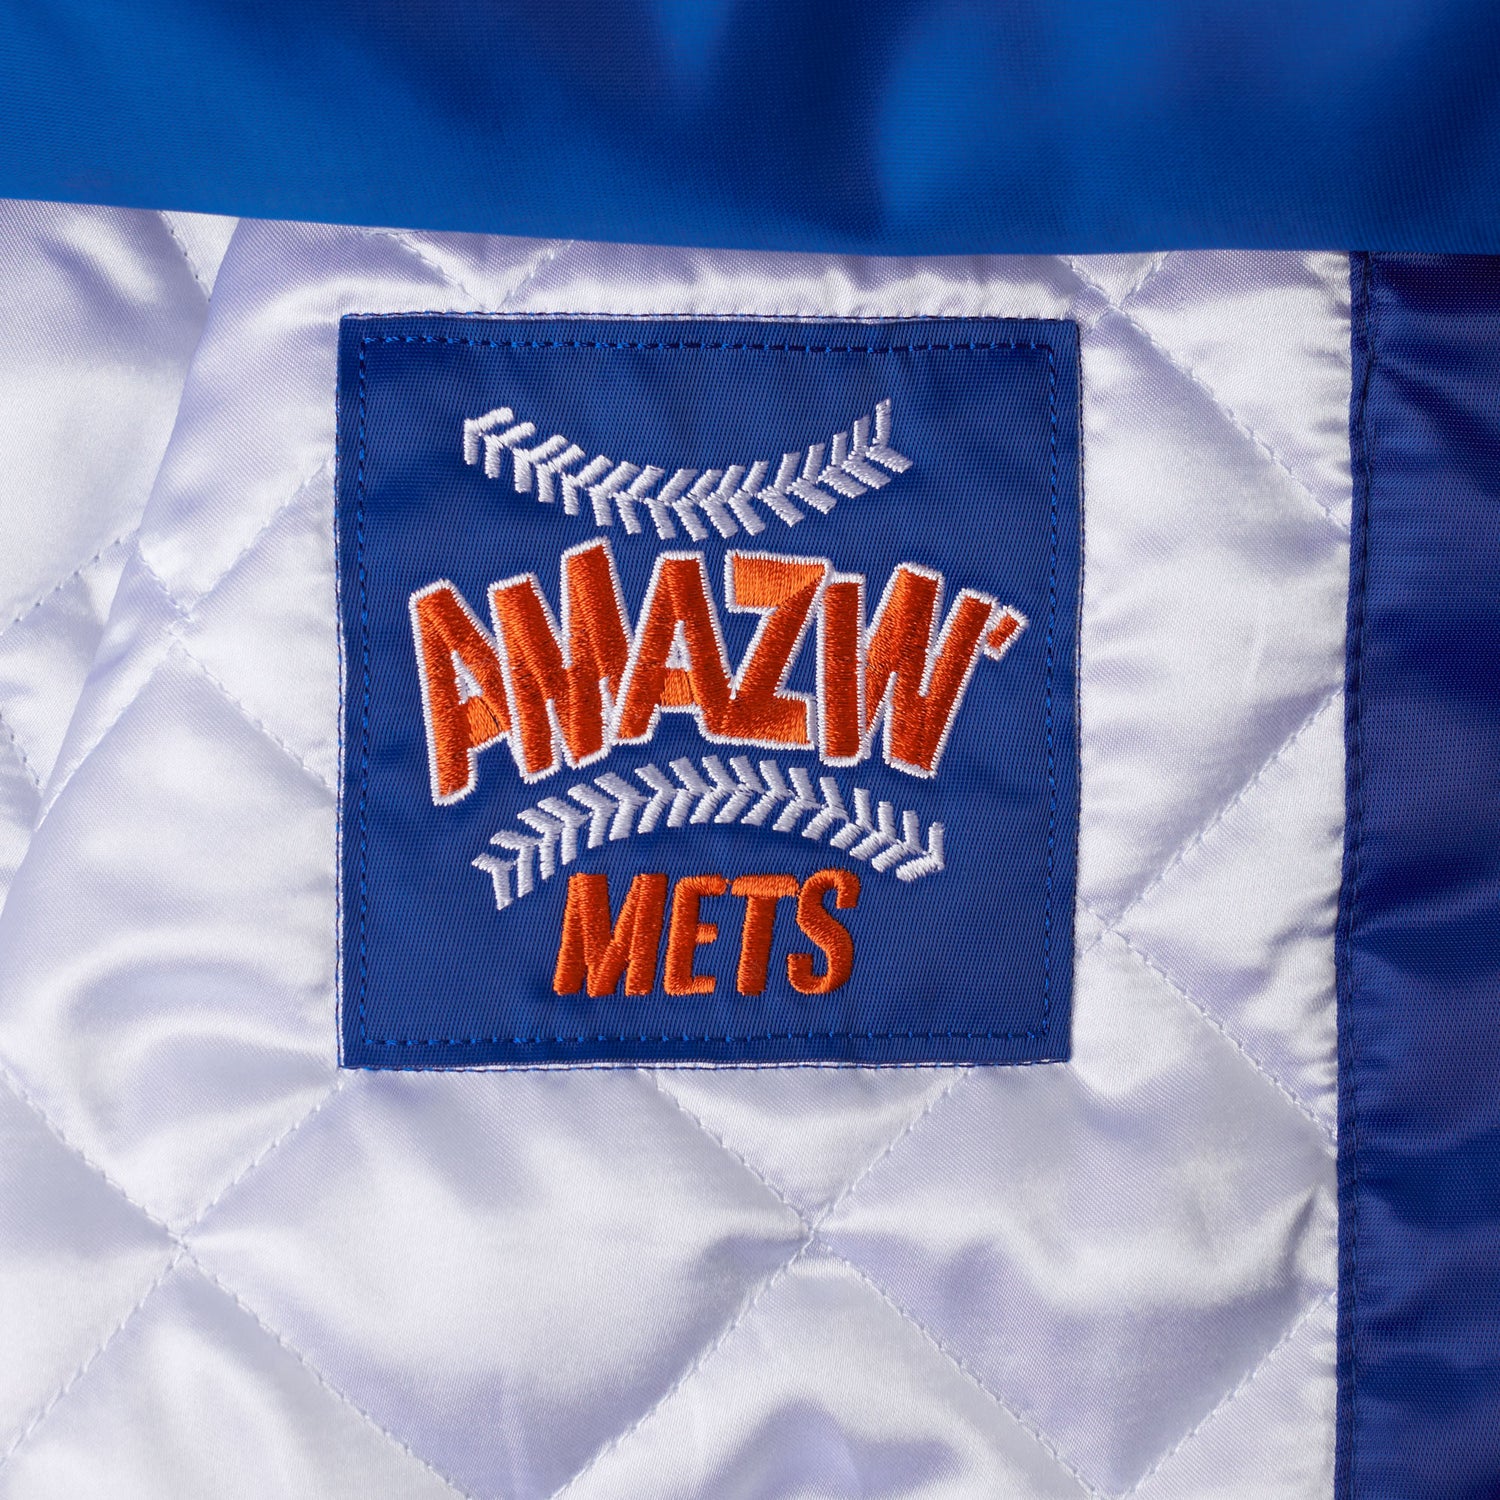 Starter New York Mets MLB Jerseys for sale